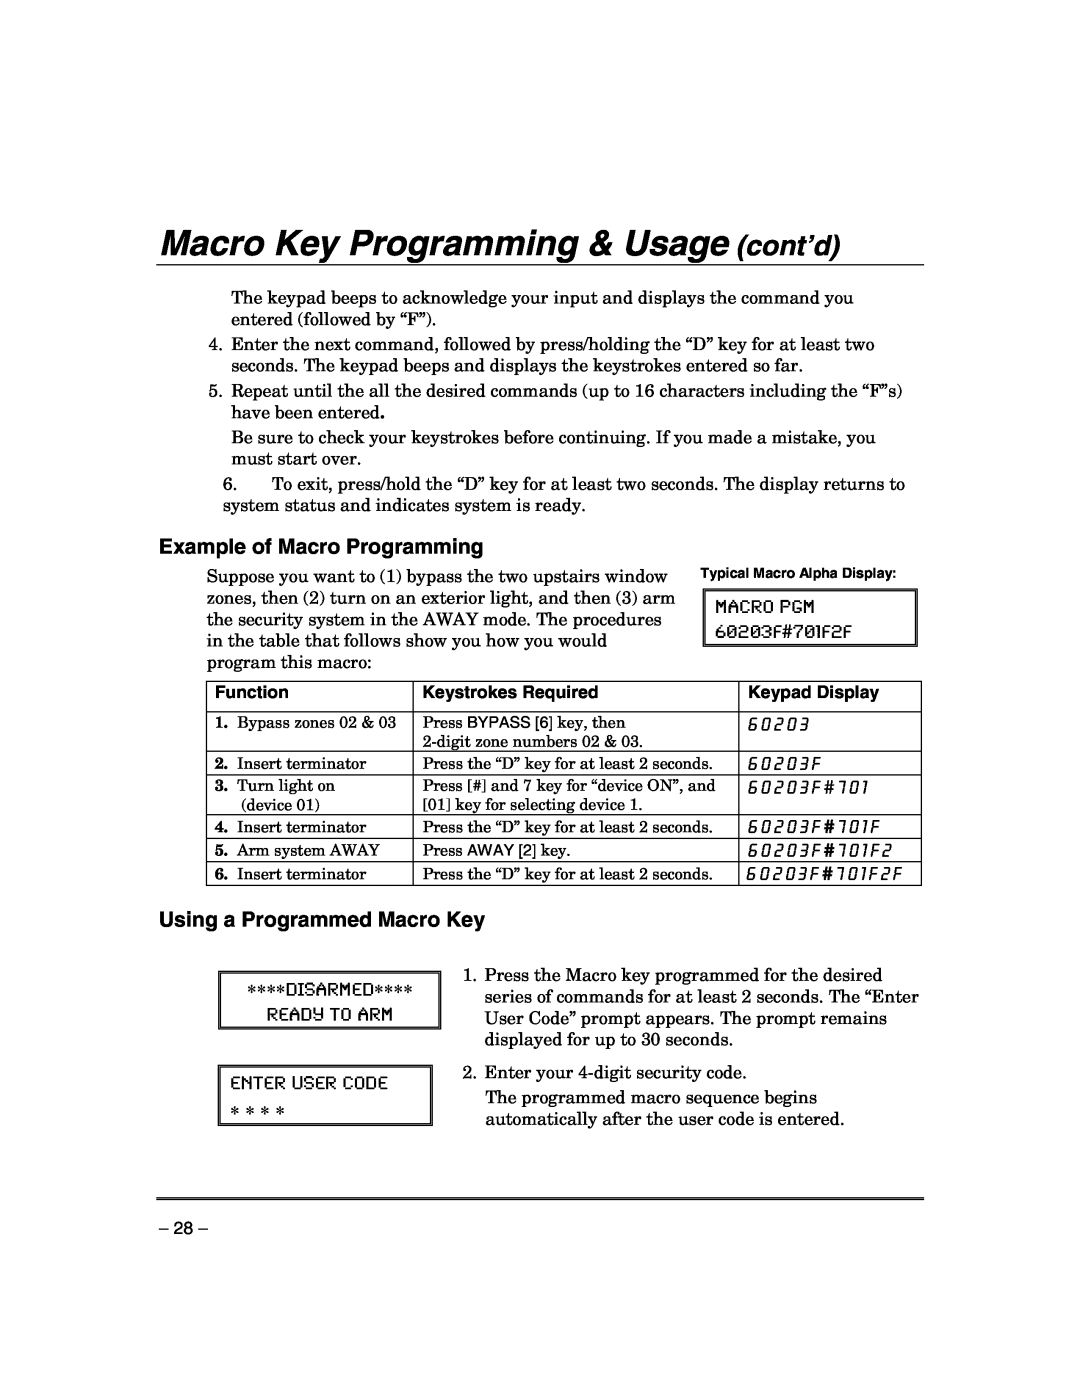 Honeywell VISTA-21IPSIA Macro Key Programming & Usage cont’d, Example of Macro Programming, Using a Programmed Macro Key 